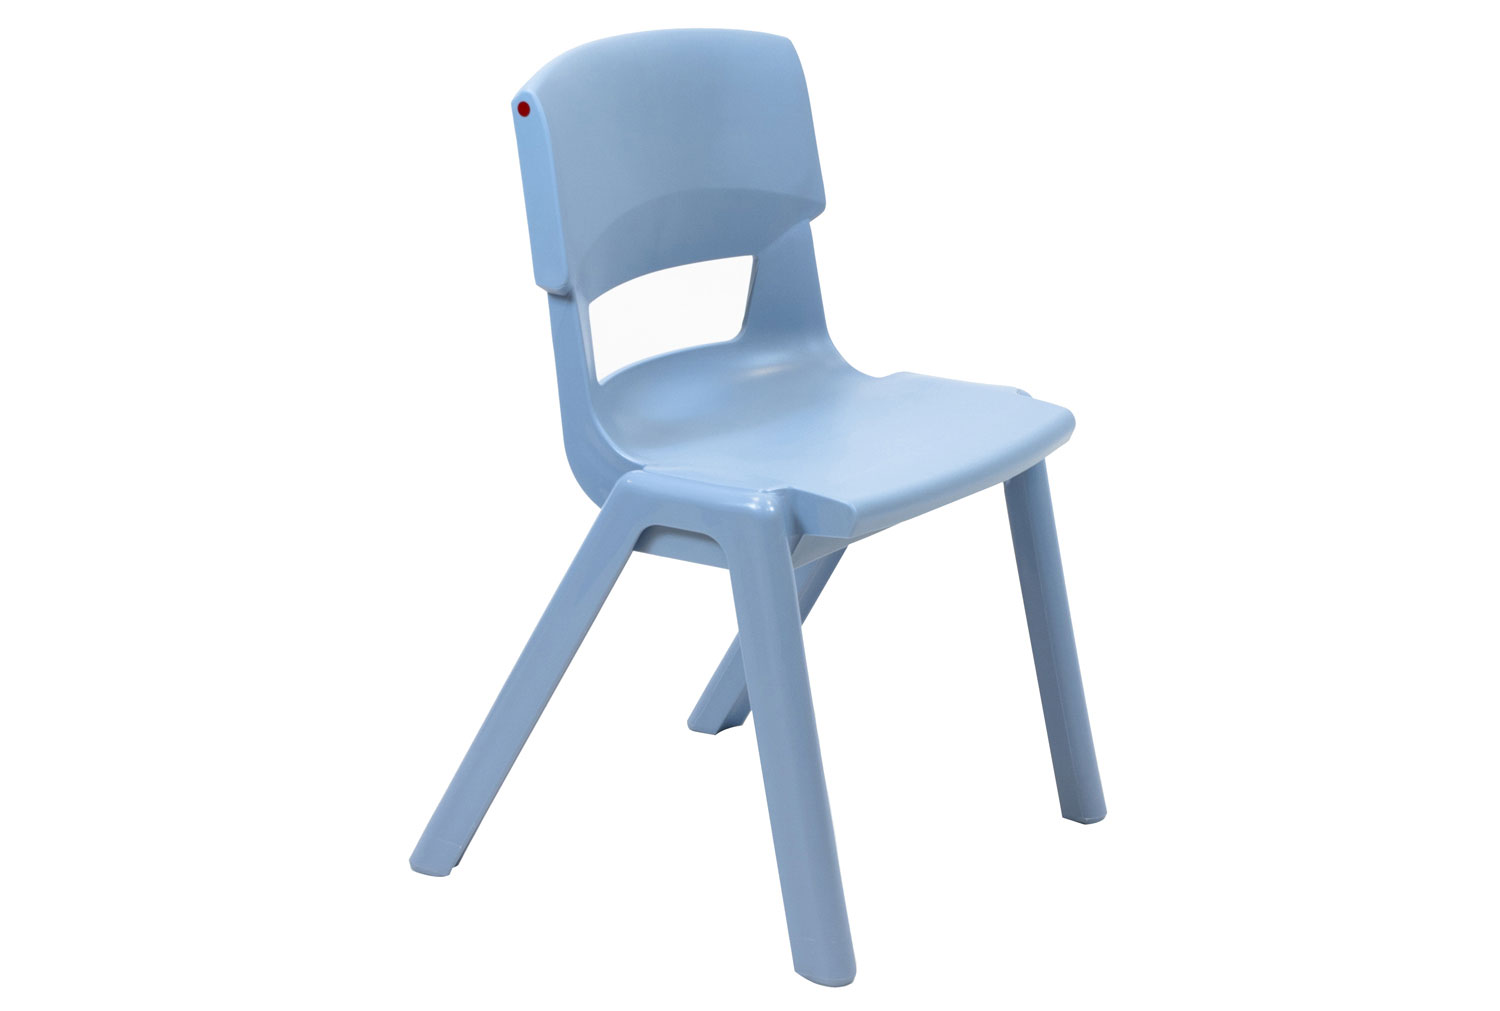 Qty 10 - Postura+ Classroom Chair, 8-11 Years - 34wx31dx38h (cm), Powder Blue